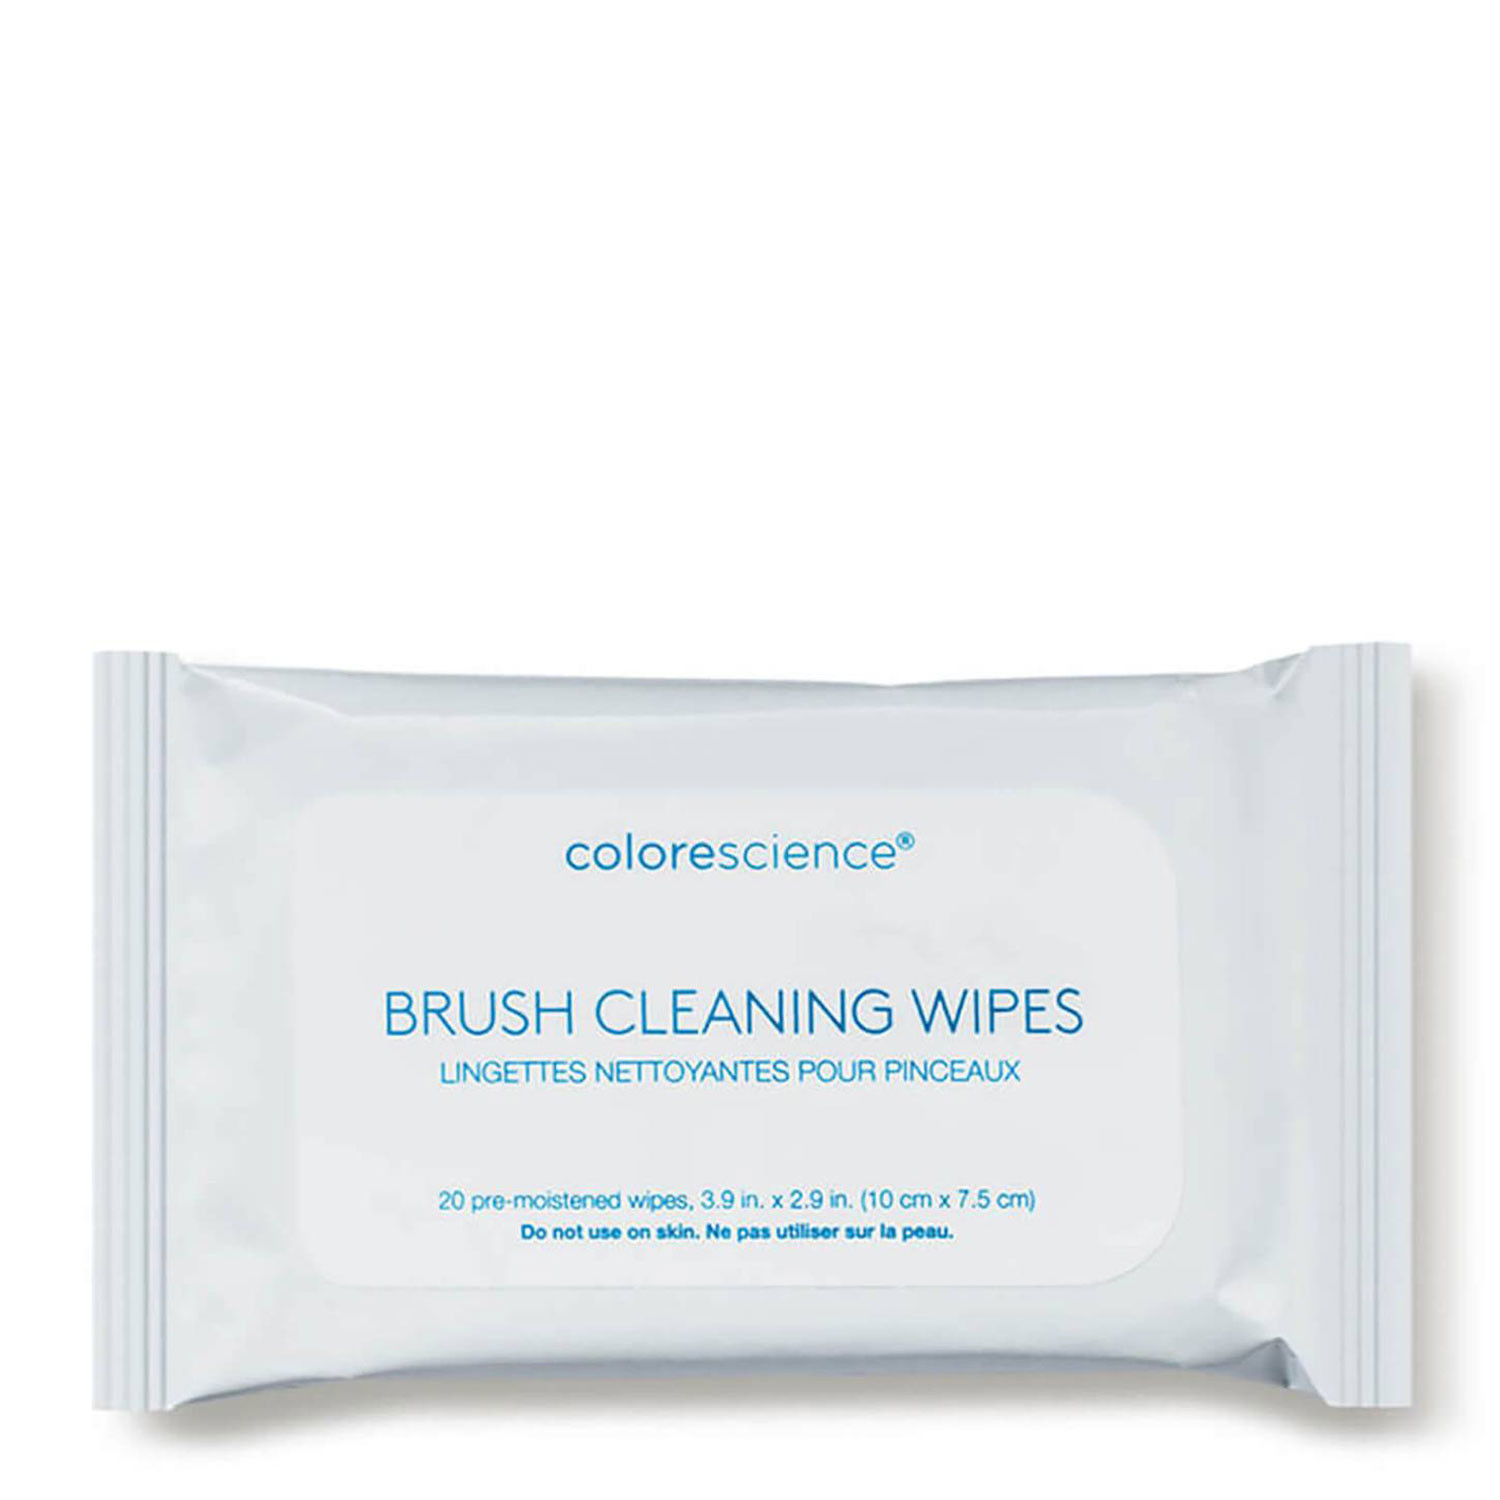 Colorescience Brush Cleaning Wipes - Салфетки для очистки кистей для макияжа